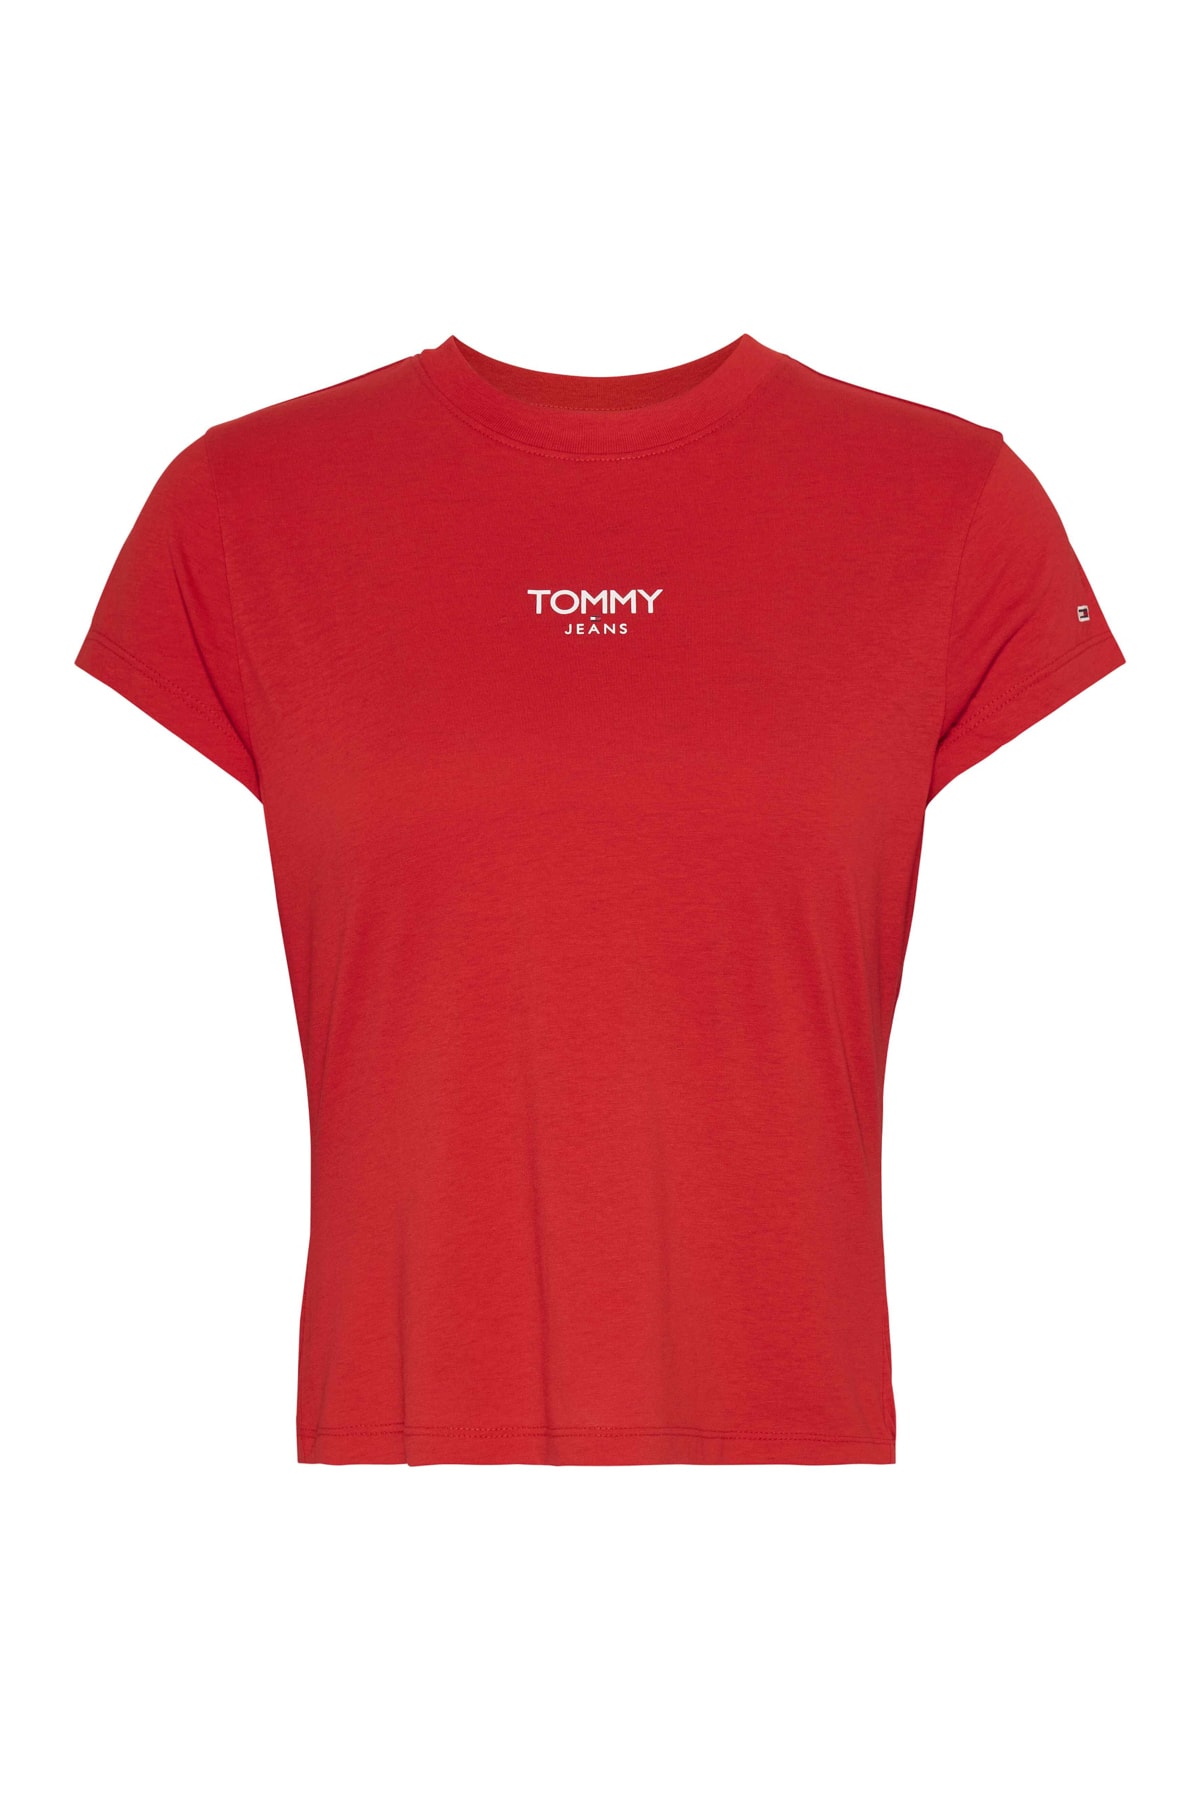 Tommy Hilfiger T-Shirt Women / Girls Deep Crimson - Trendyol